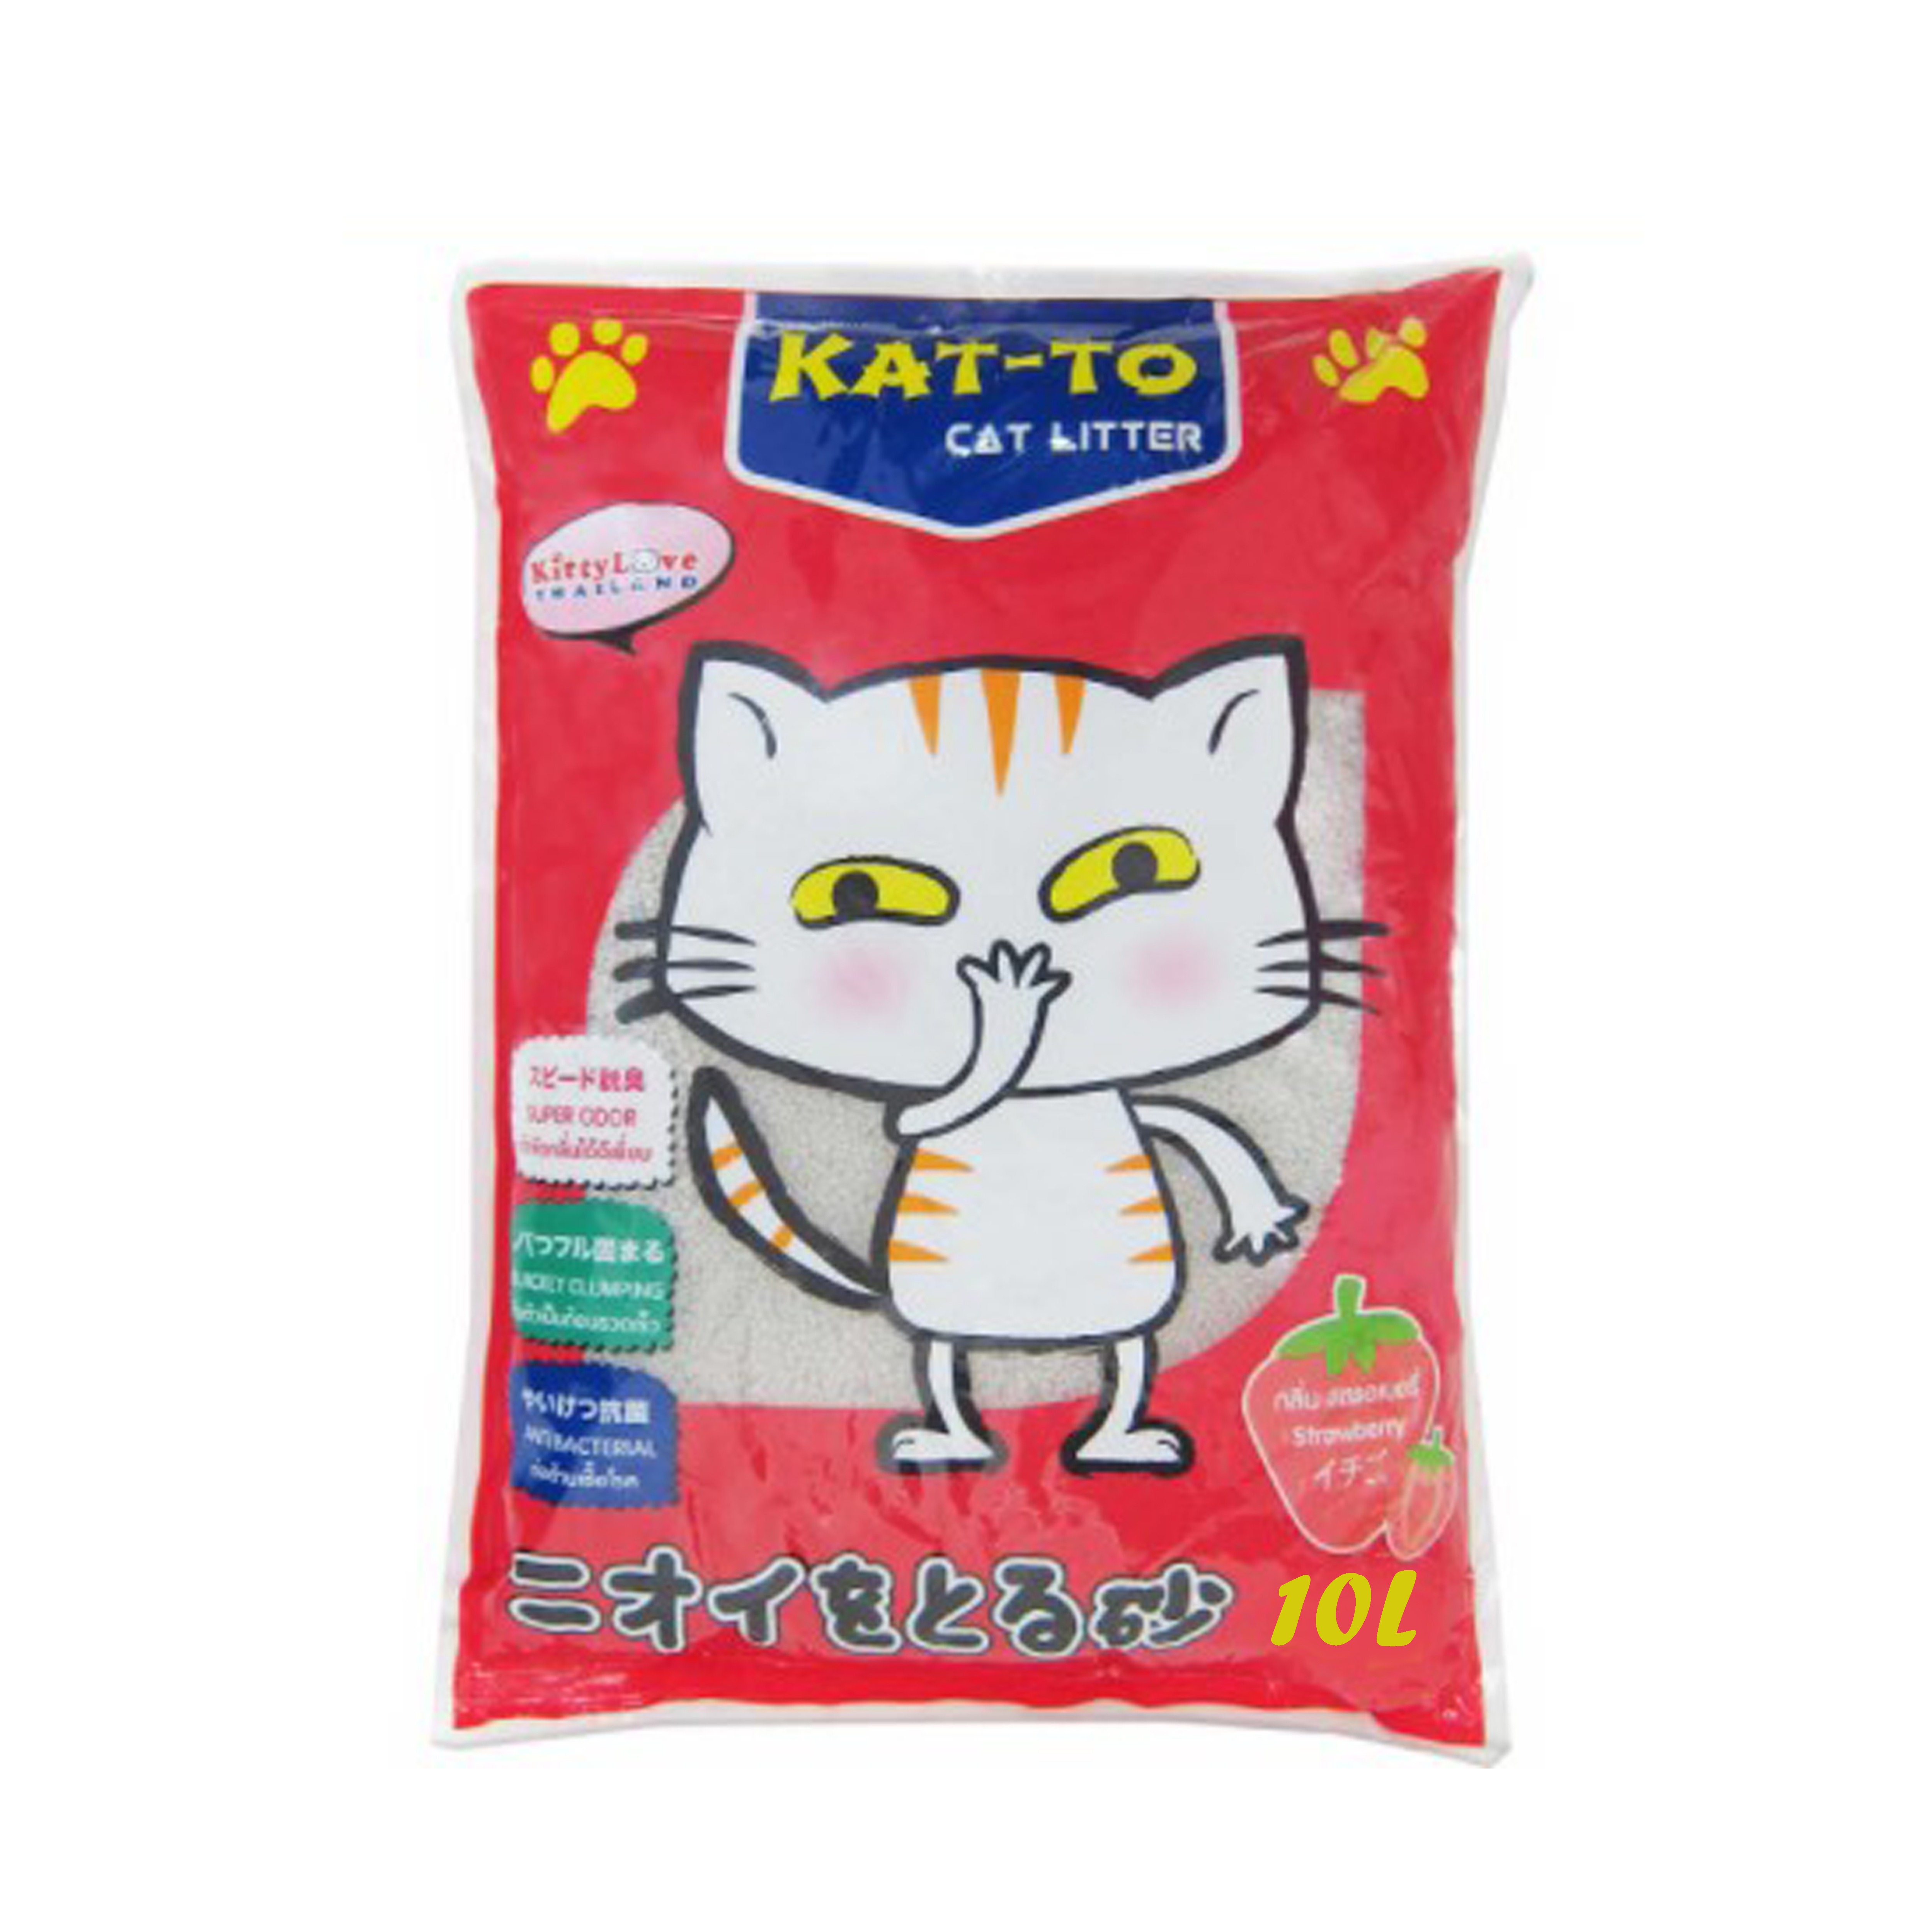 Kat-to Cat Litter Strawberry 10L แคทโต ทรายแมว กลิ่นสตอเบอรี่ ขนาด 10L 